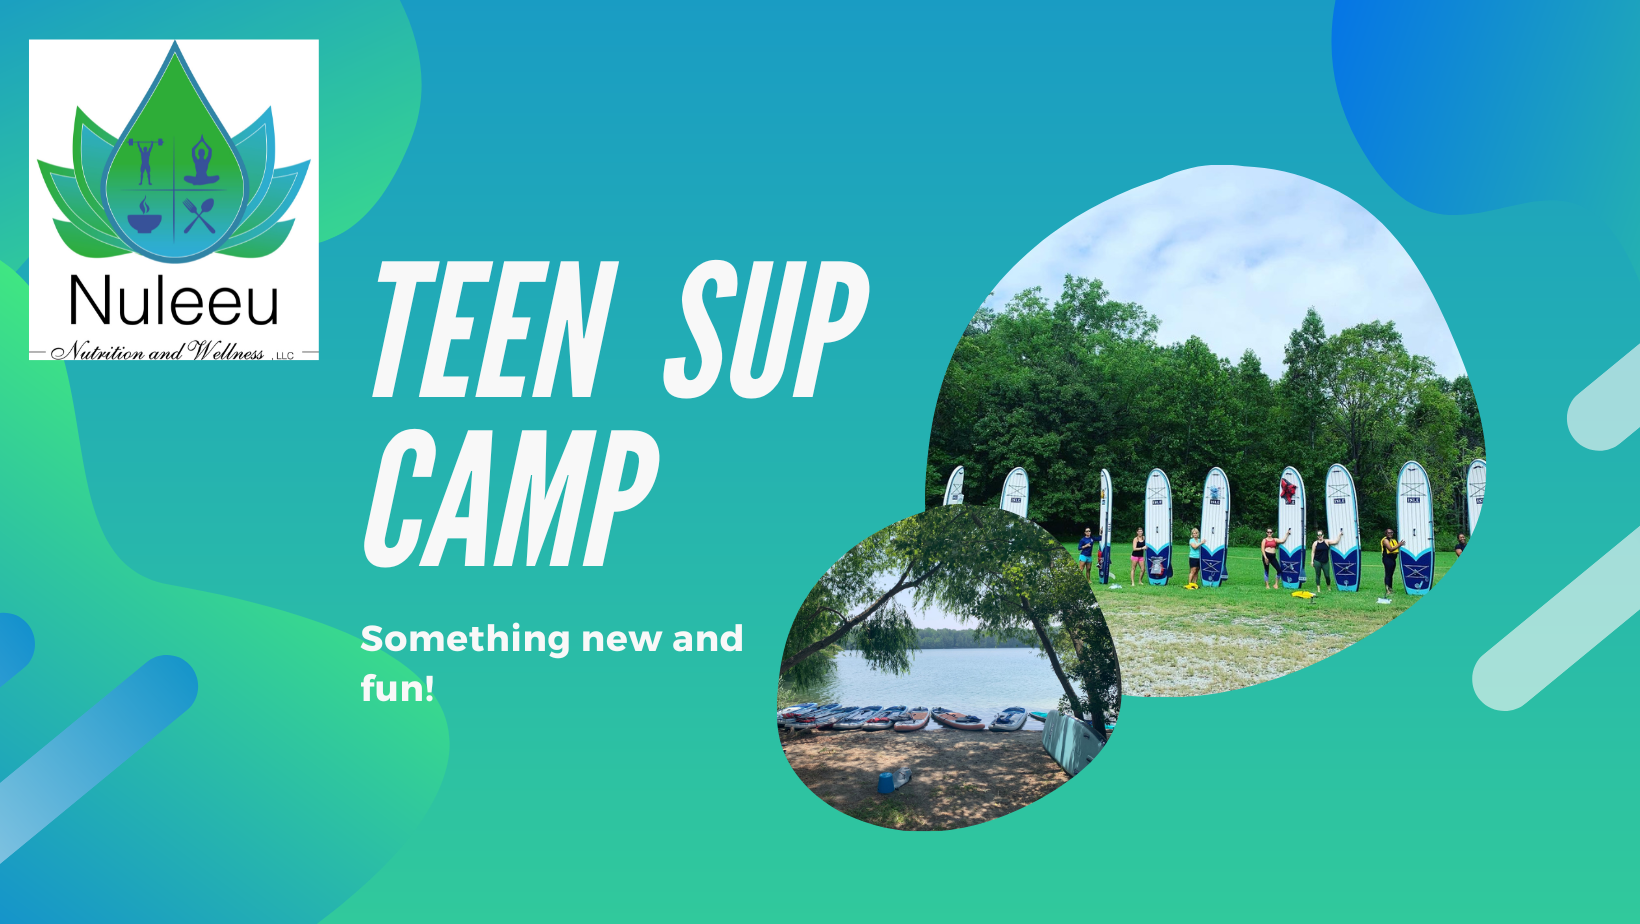 Teen SUP camp